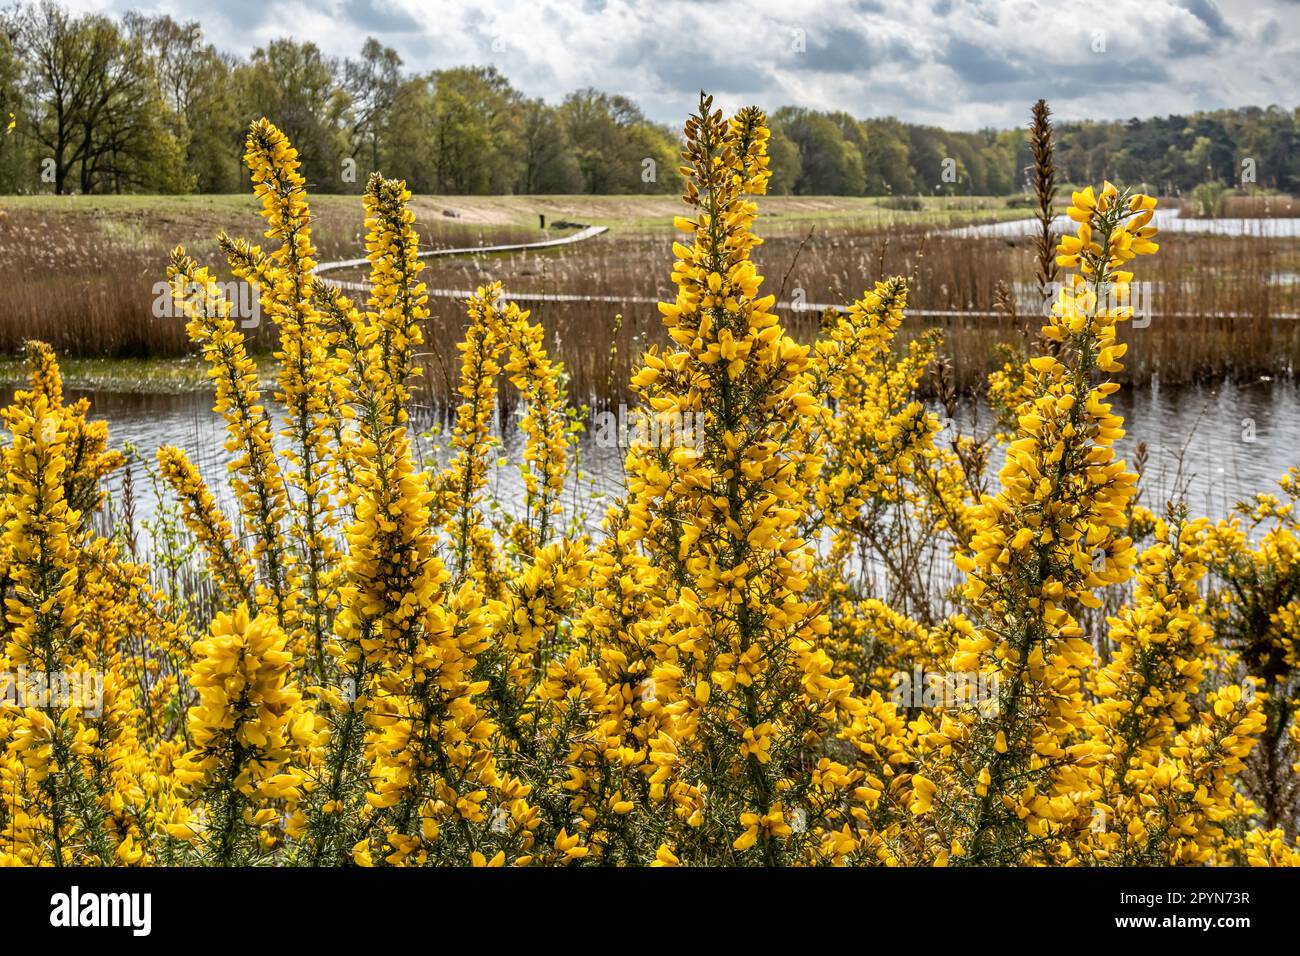 Gorse, Ulex europaeus, spiny shrub in bloom with yellow flowers at Zanderij Crailo, Hilversum, Netherlands Stock Photo